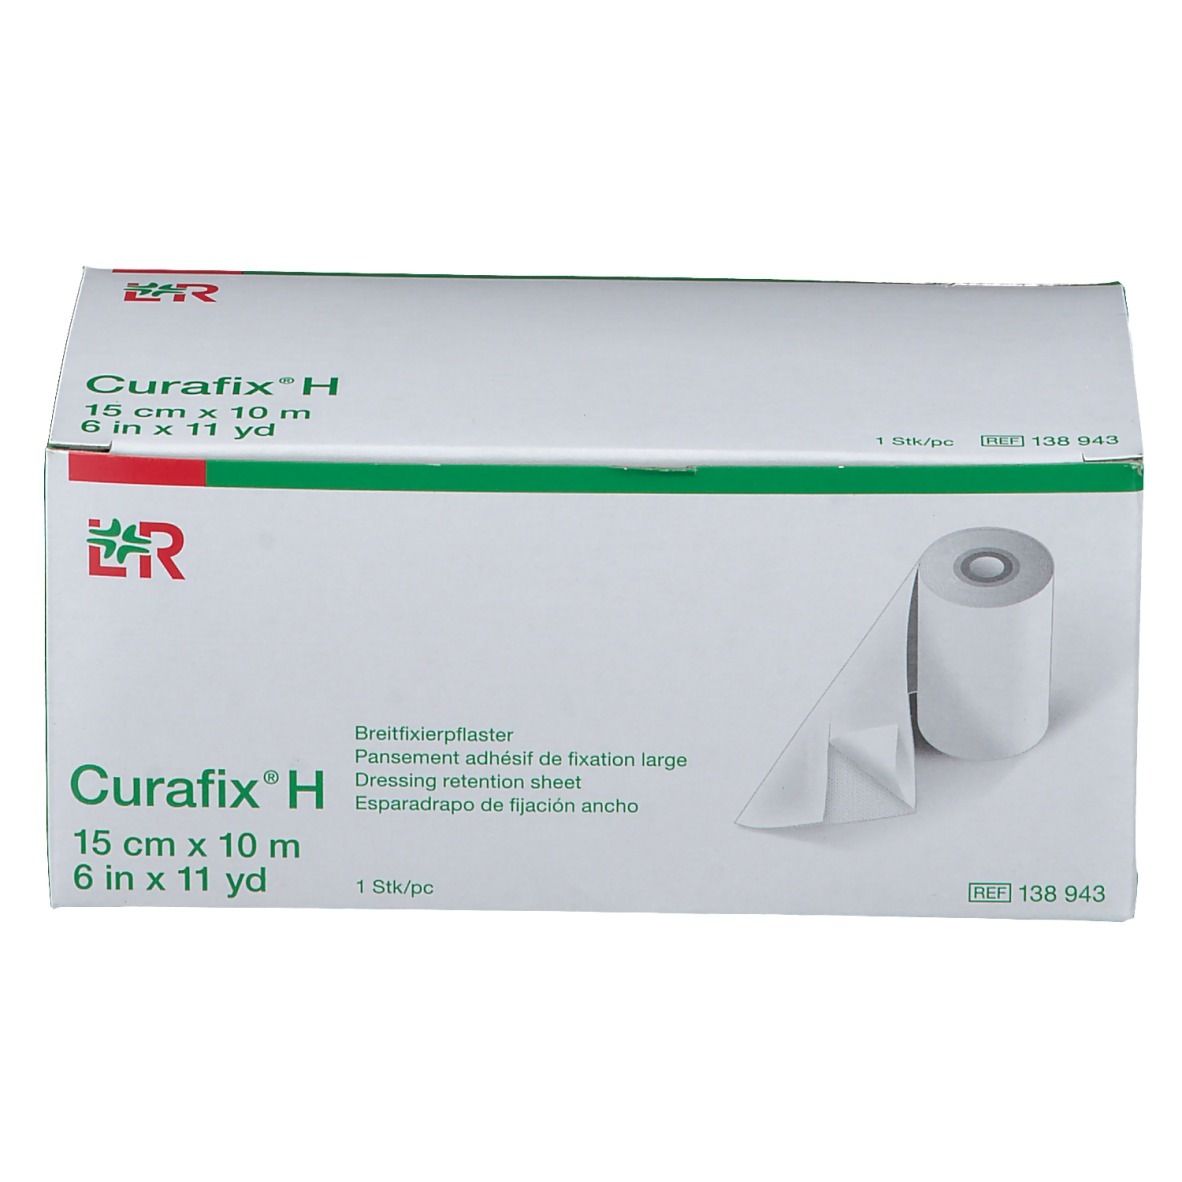 Curafix® H 15 cm x 10 m